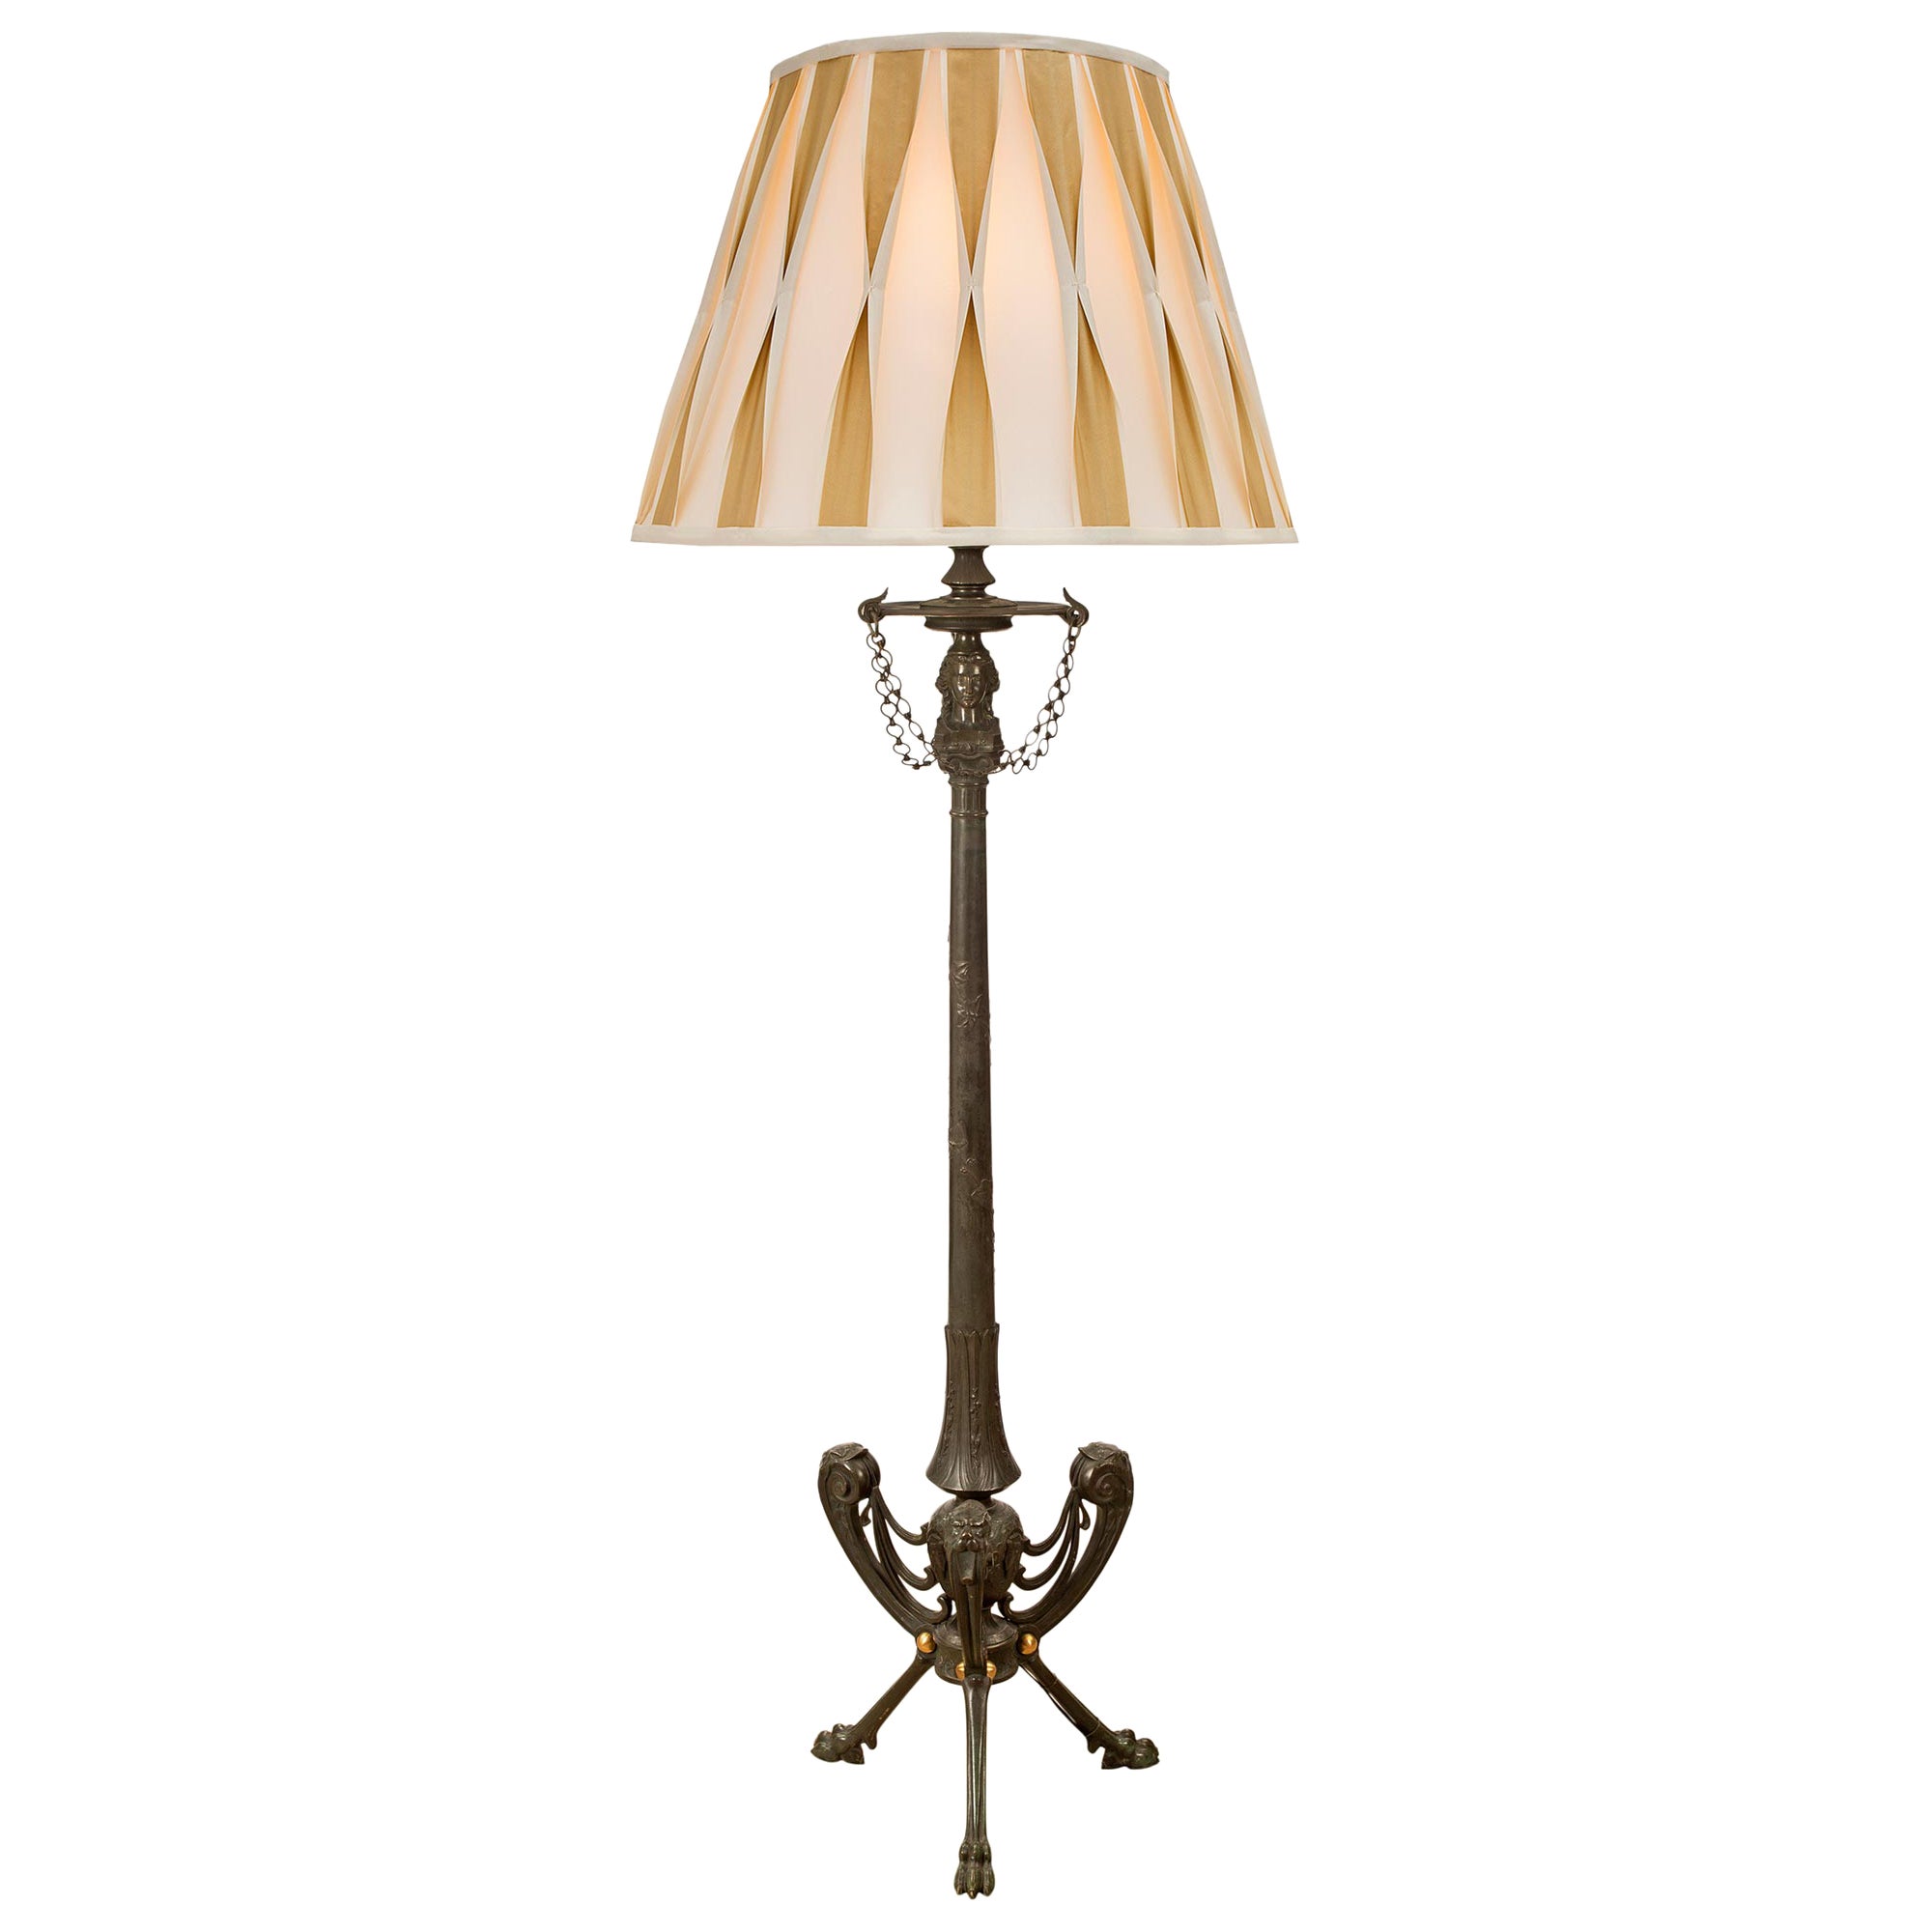 French 19th Century Neoclassical Style Verdigris Bronze and Ormolu Floor Lamp